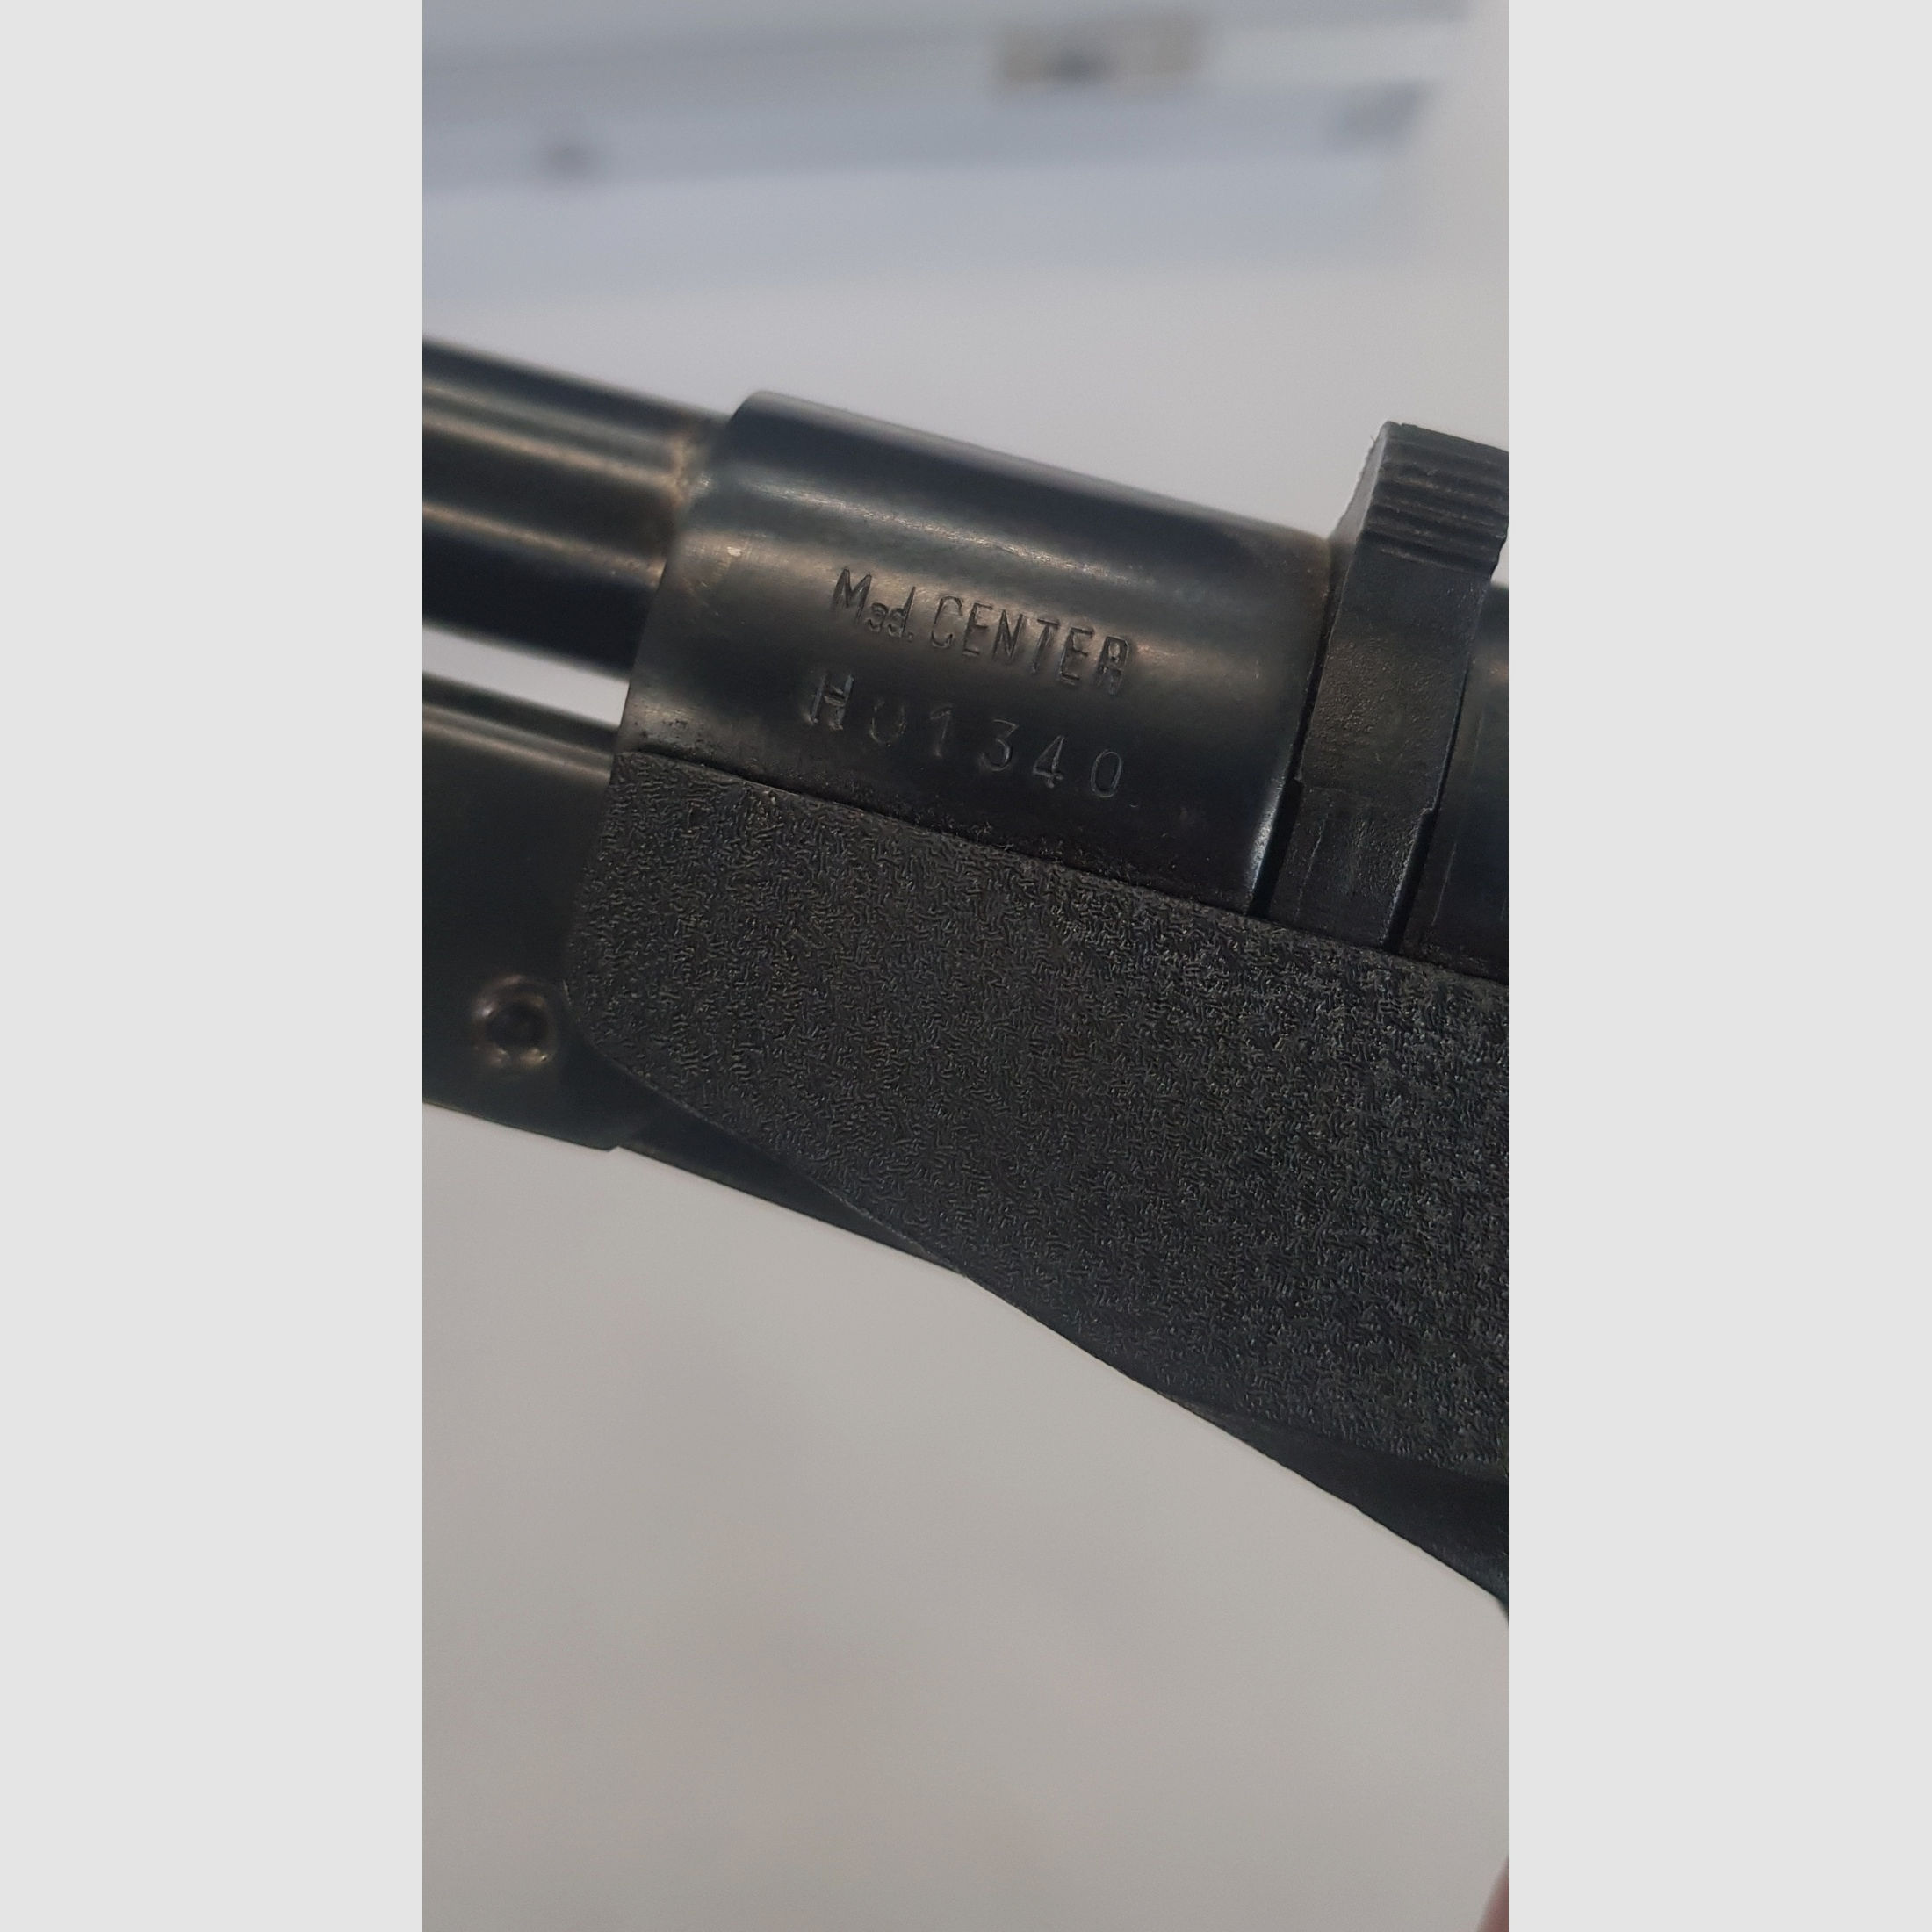 Luftpistole Unterhebelspanner Elgamo Mod. Center 4,5mm Diabolo